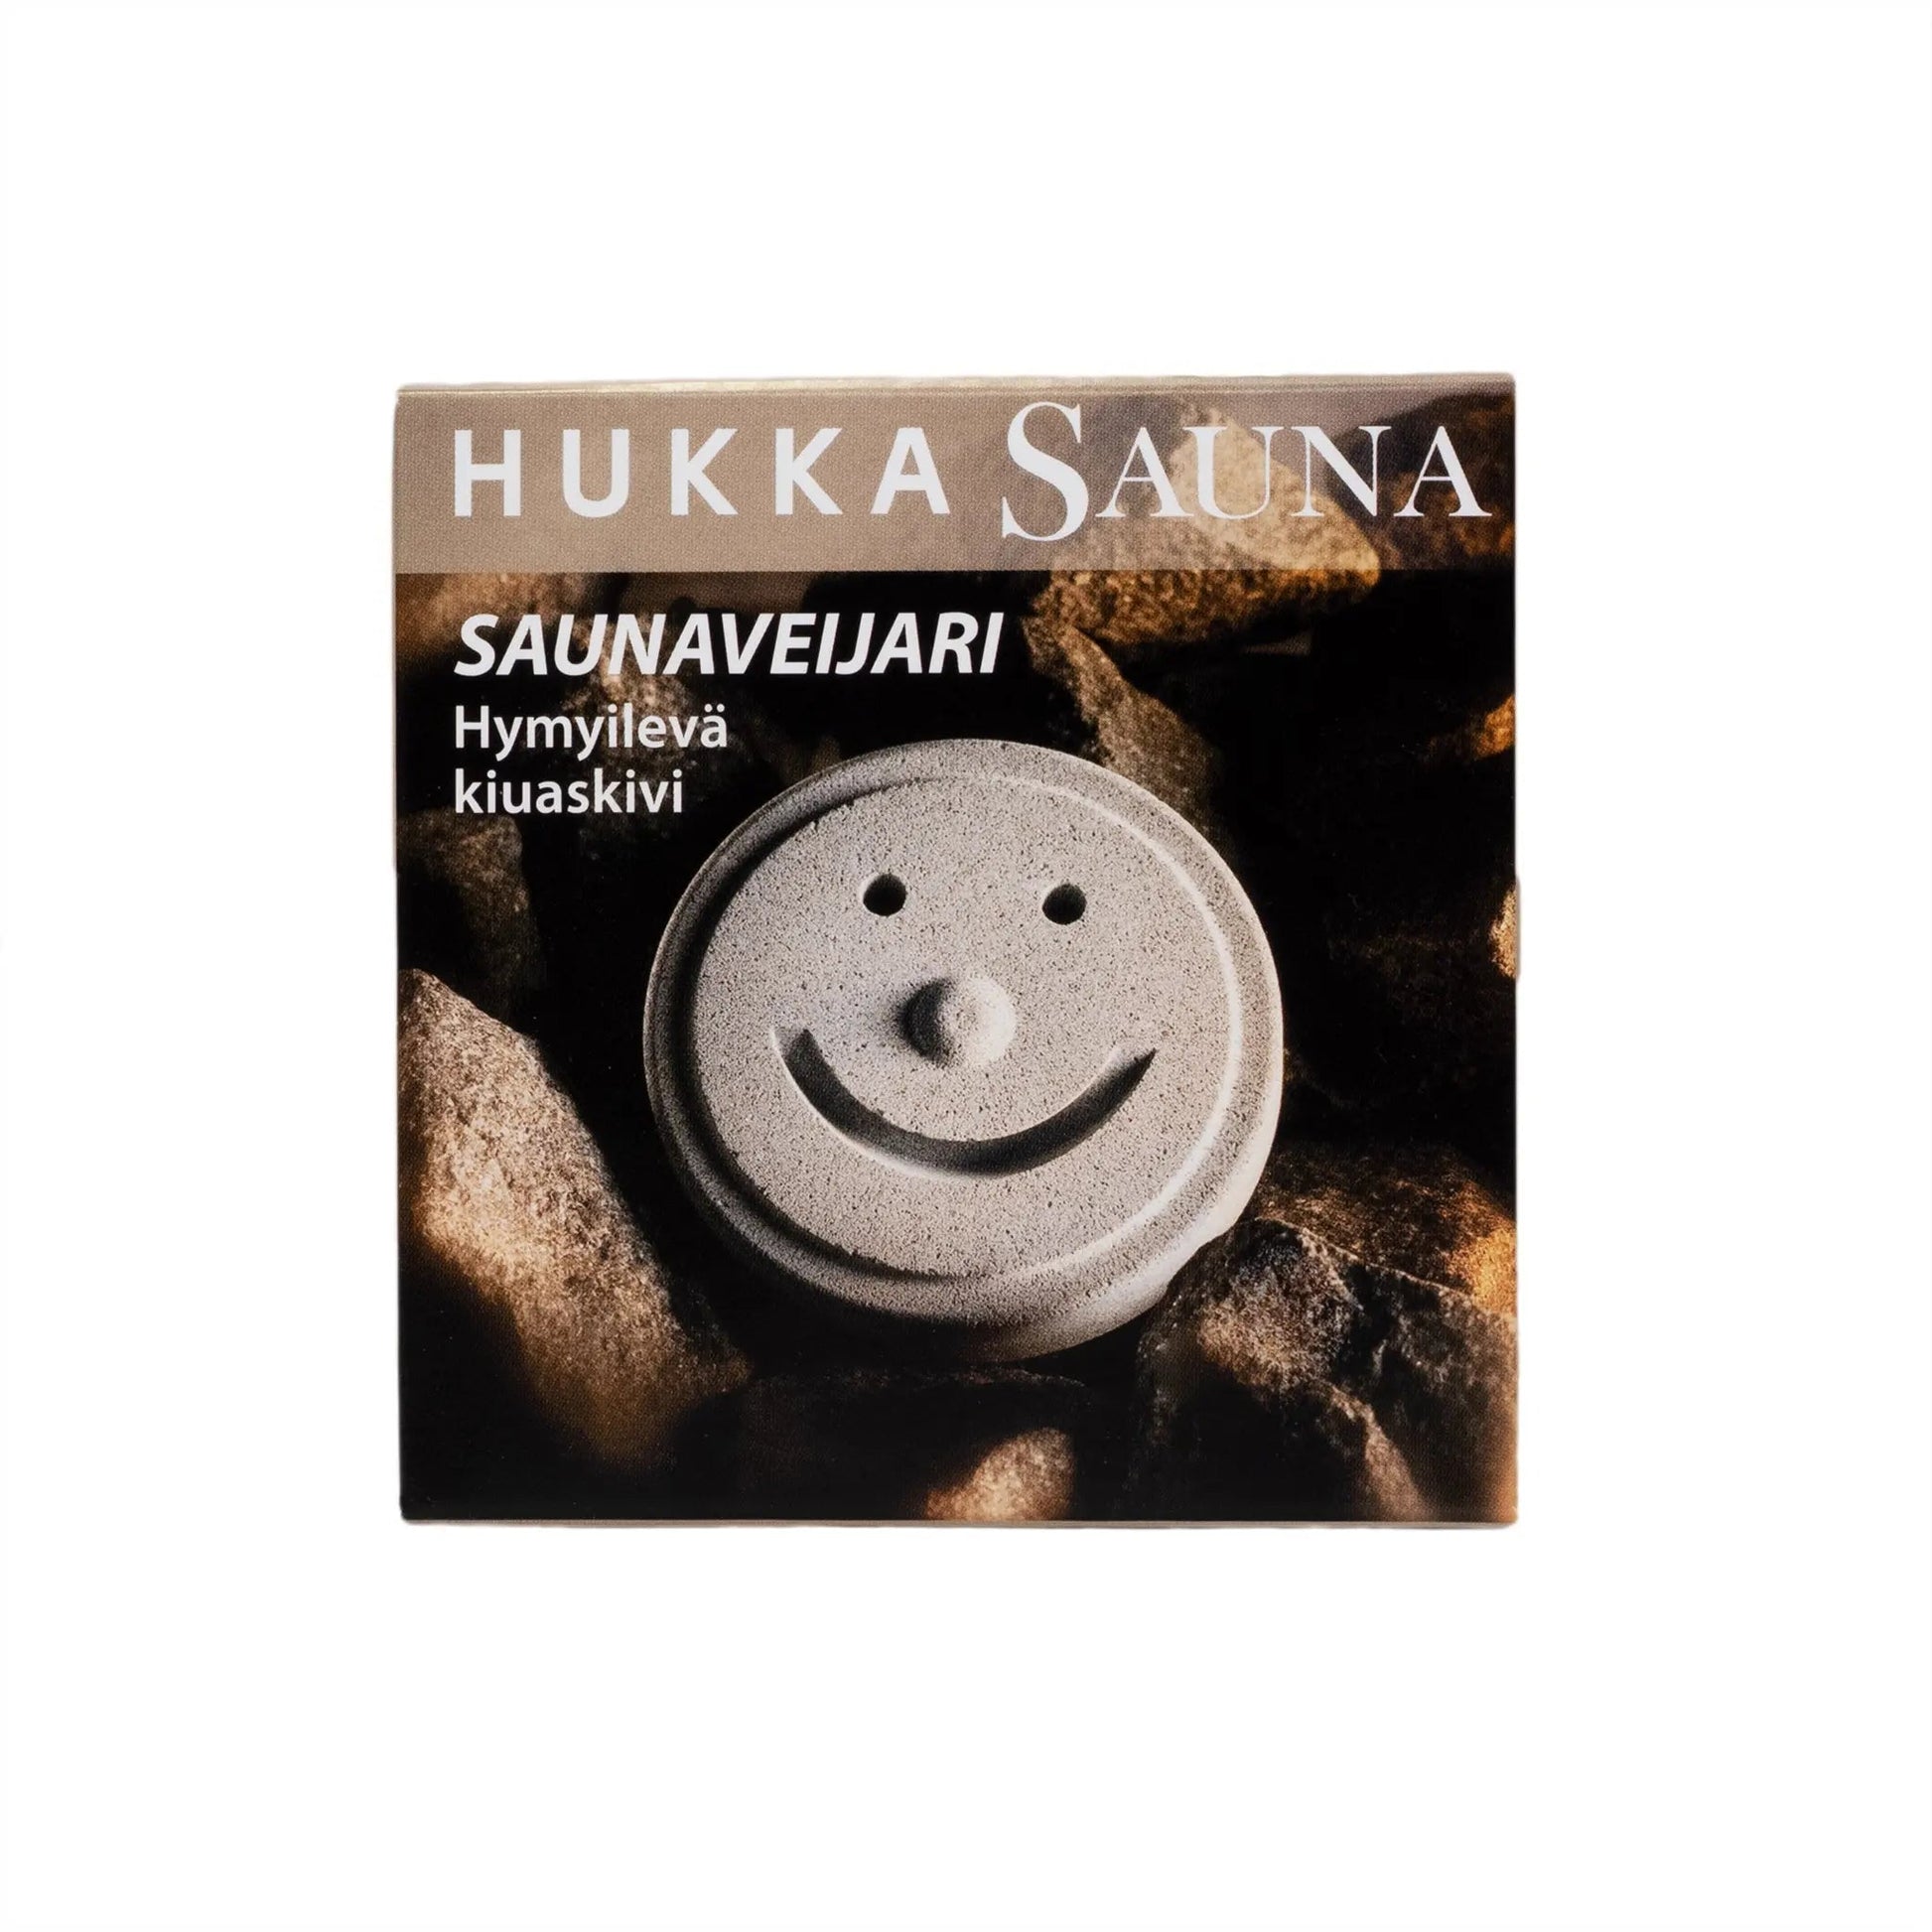 Hukka Soapstone Sauna Smiley soapstone | Finnmark Sauna